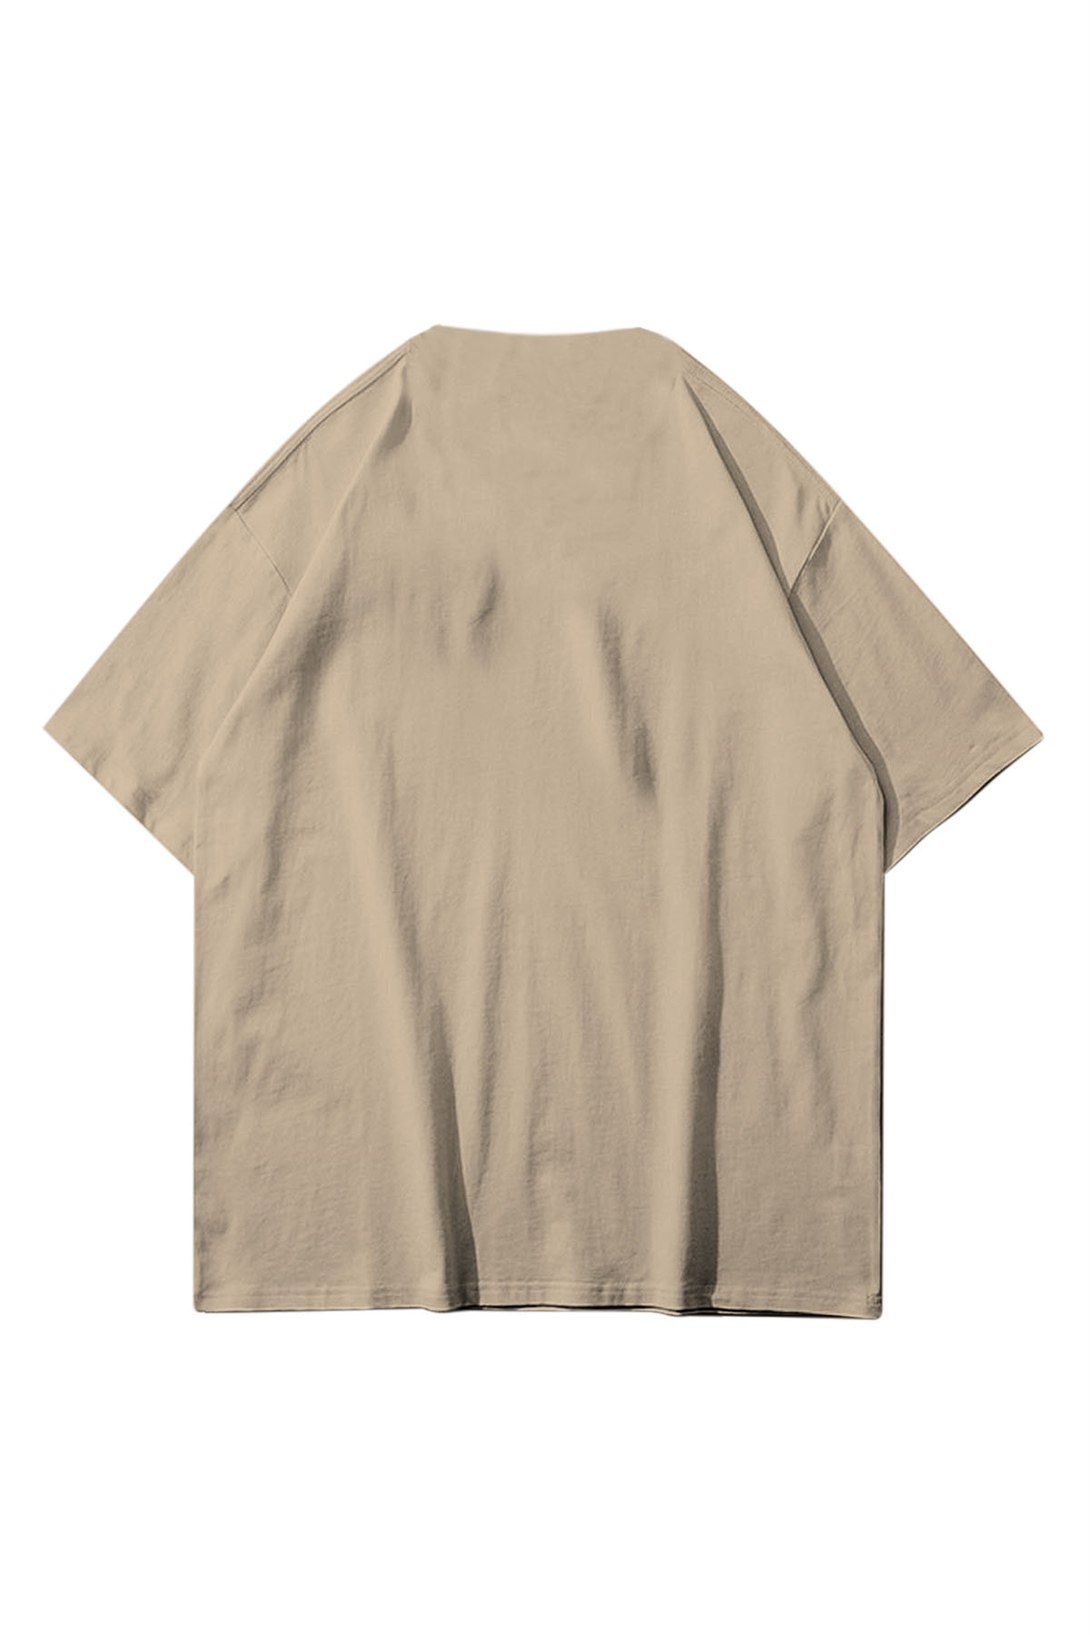 Trendiz Unisex Kemik Kalp Taş Tshirt